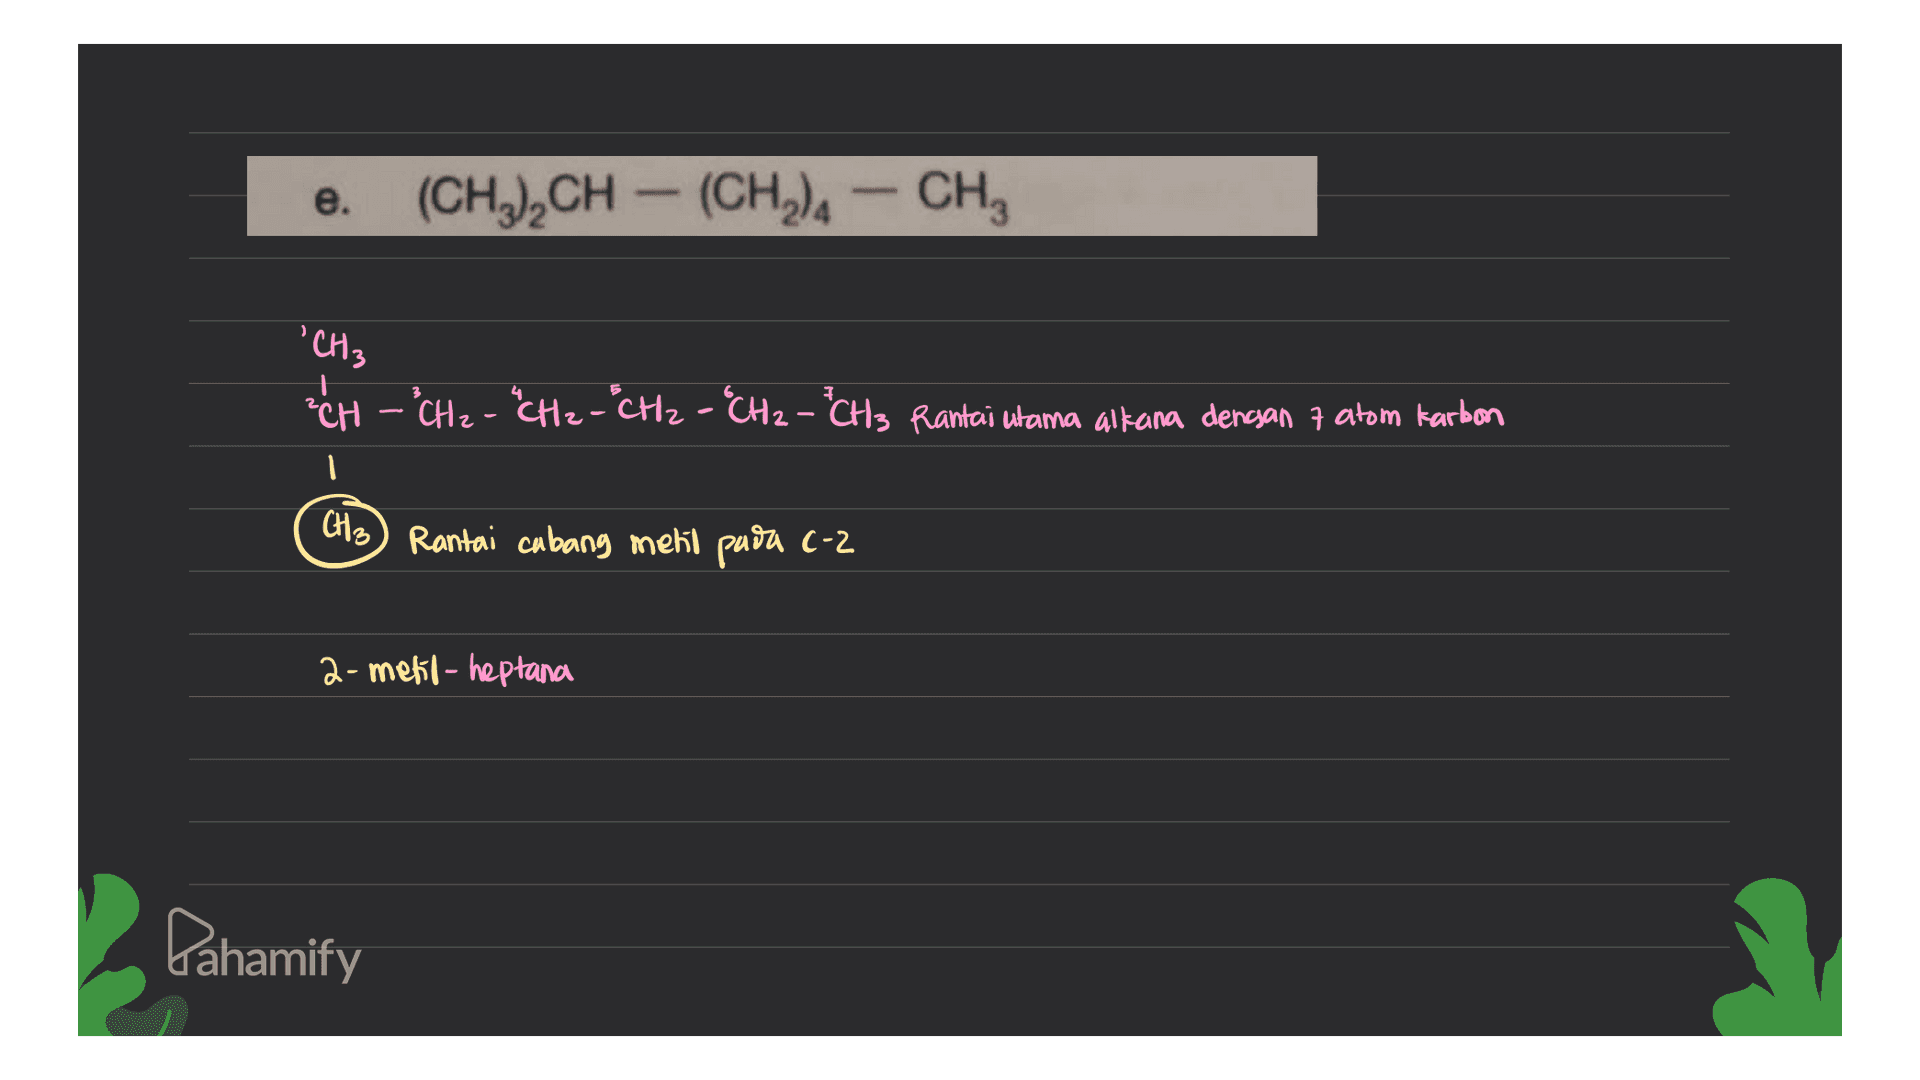 e. (CH3),CH -- (CH2). - CH , 'CH3 + ?CH - CH2 - "CH2 - CH2 - "CH2 - "CH 3 Rantai ulama altana dengan 7 atom karbon I CH3) Rantai cabang metil pada c-2 a-metil-heptana Pahamify 